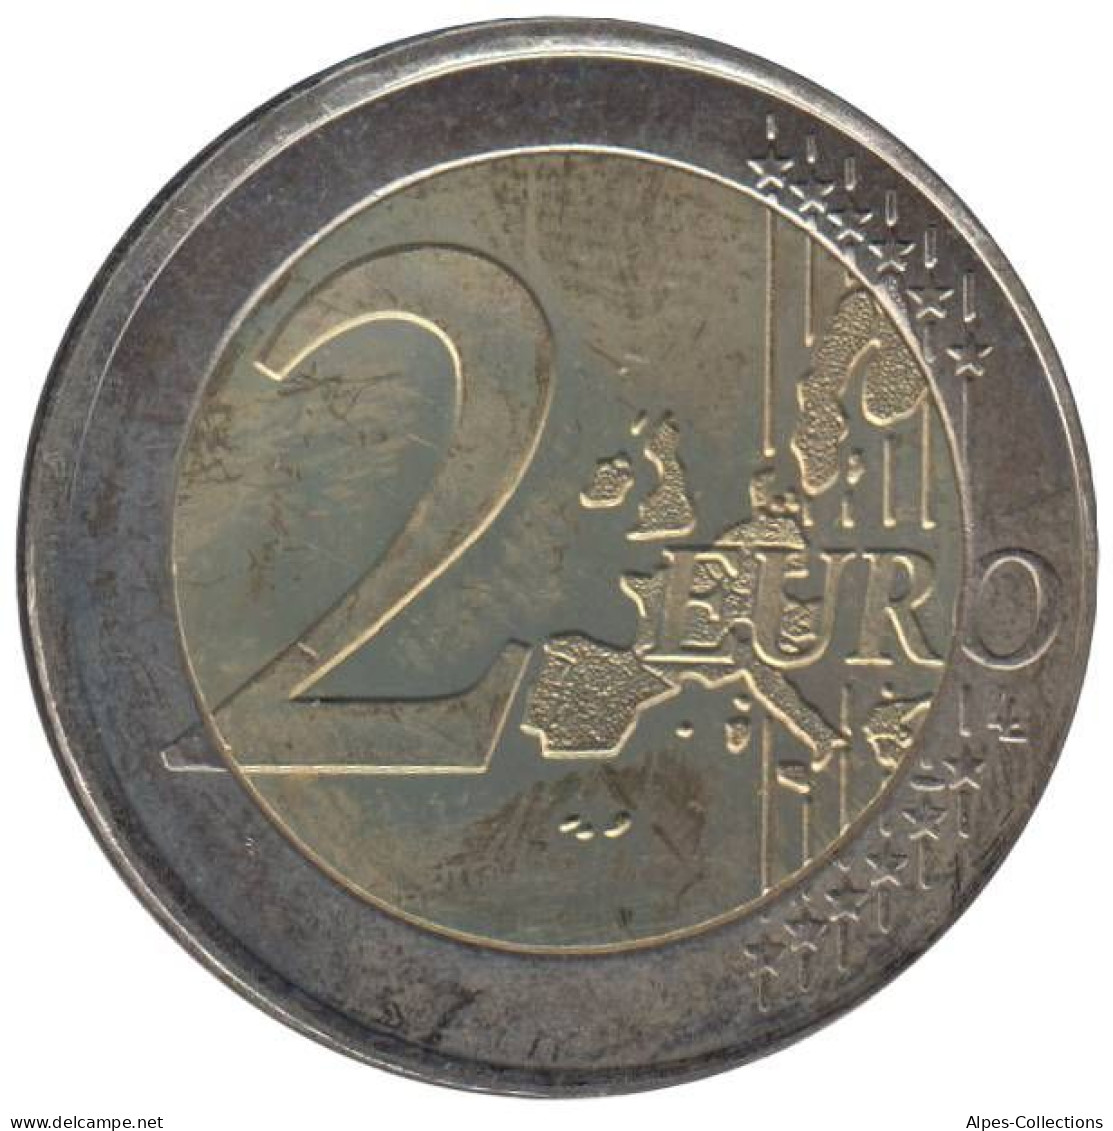 GR20002.2 - GRECE - 2 Euros - 2002 S - Atelier Finlande - Griekenland